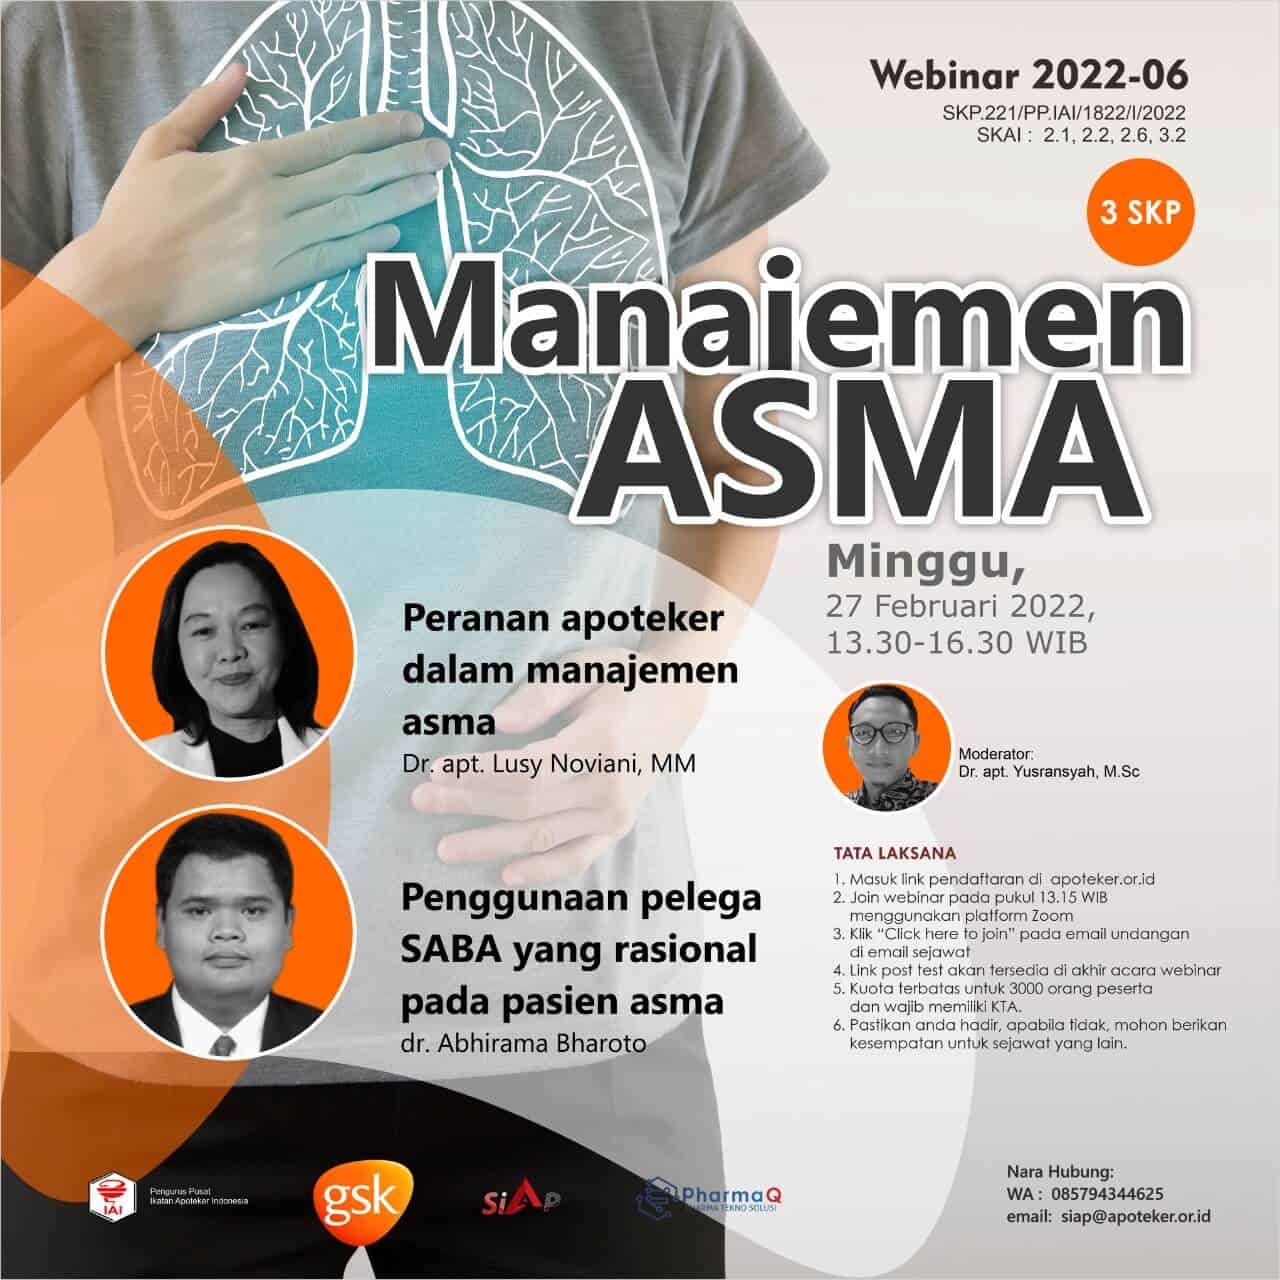 Manajemen Asma Webinar 2022 06